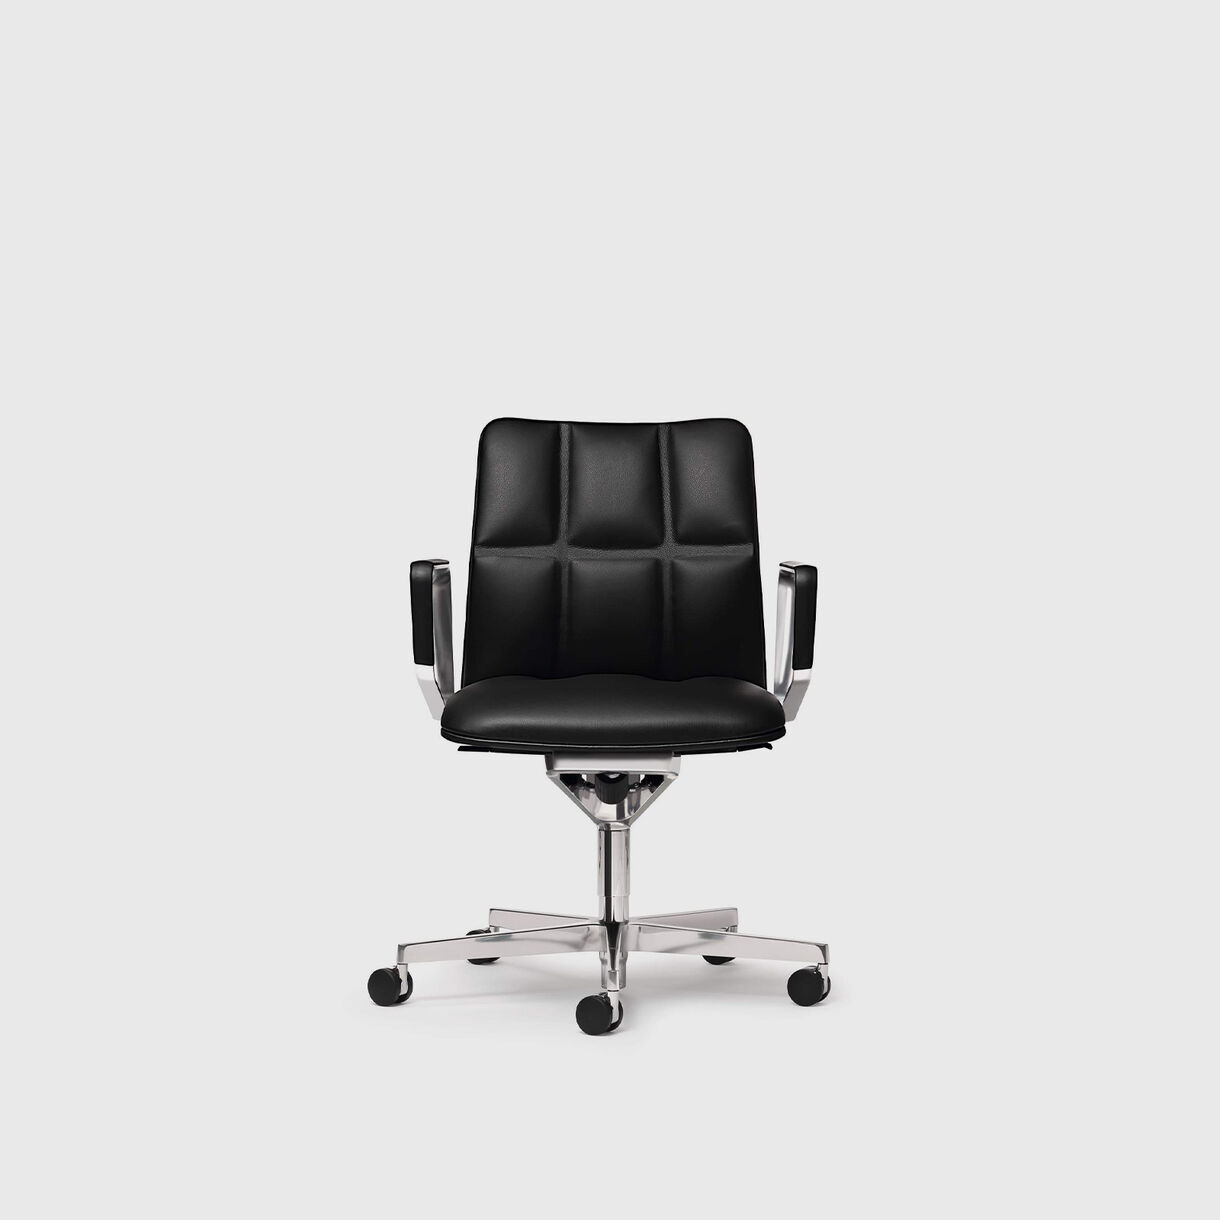 Leadchair Executive Swivel Chair, Low Back